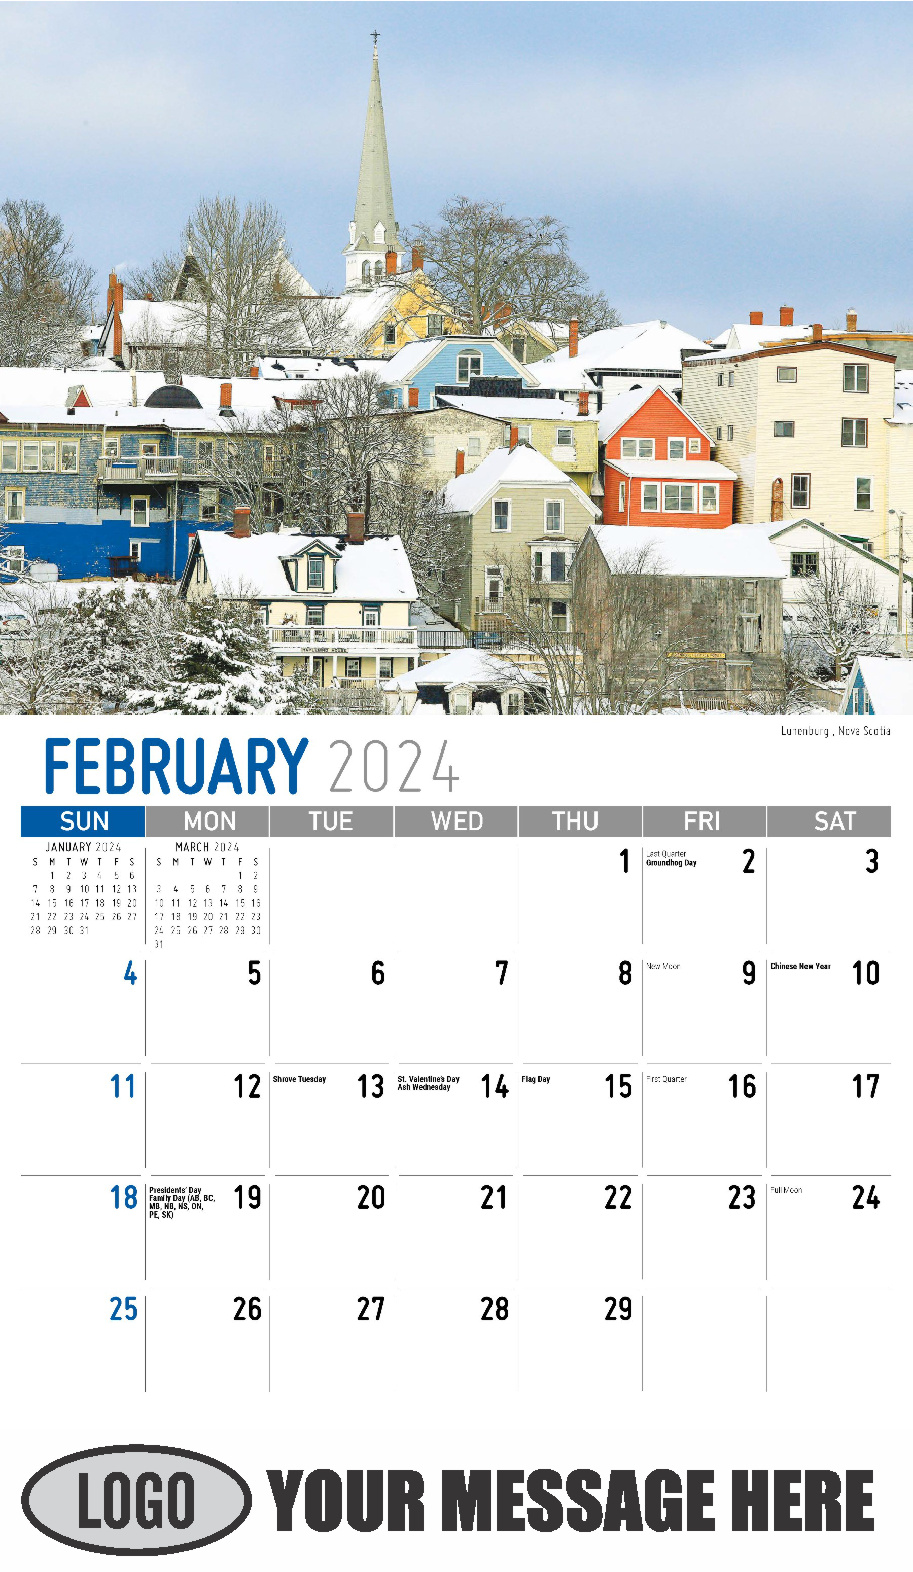 Atlantic Canada Scenic 2024 Business Promotion Calendar - February